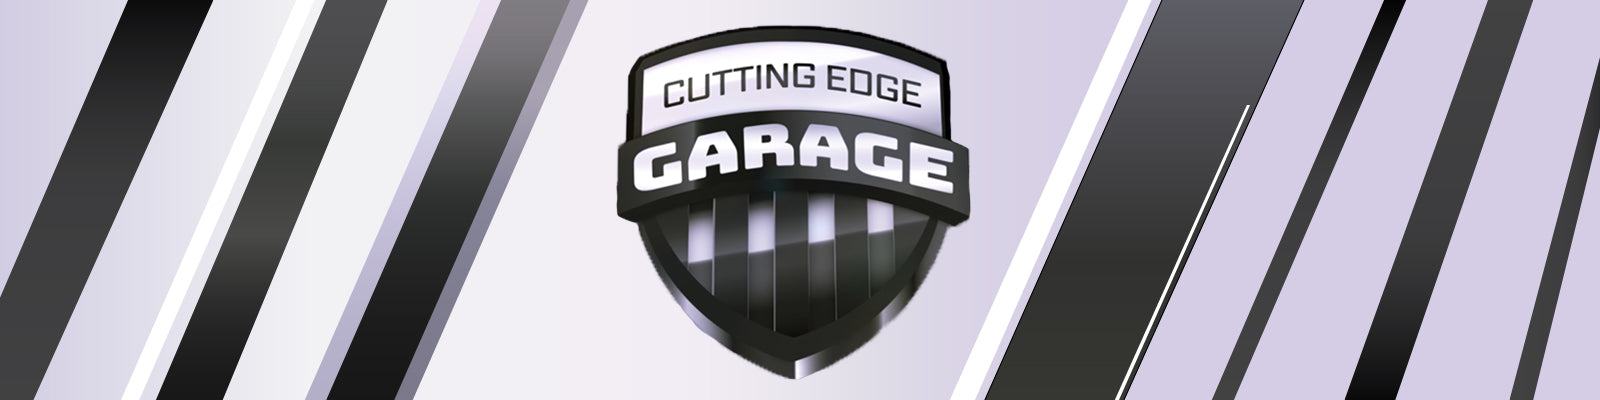 Cutting Edge Garage Banner